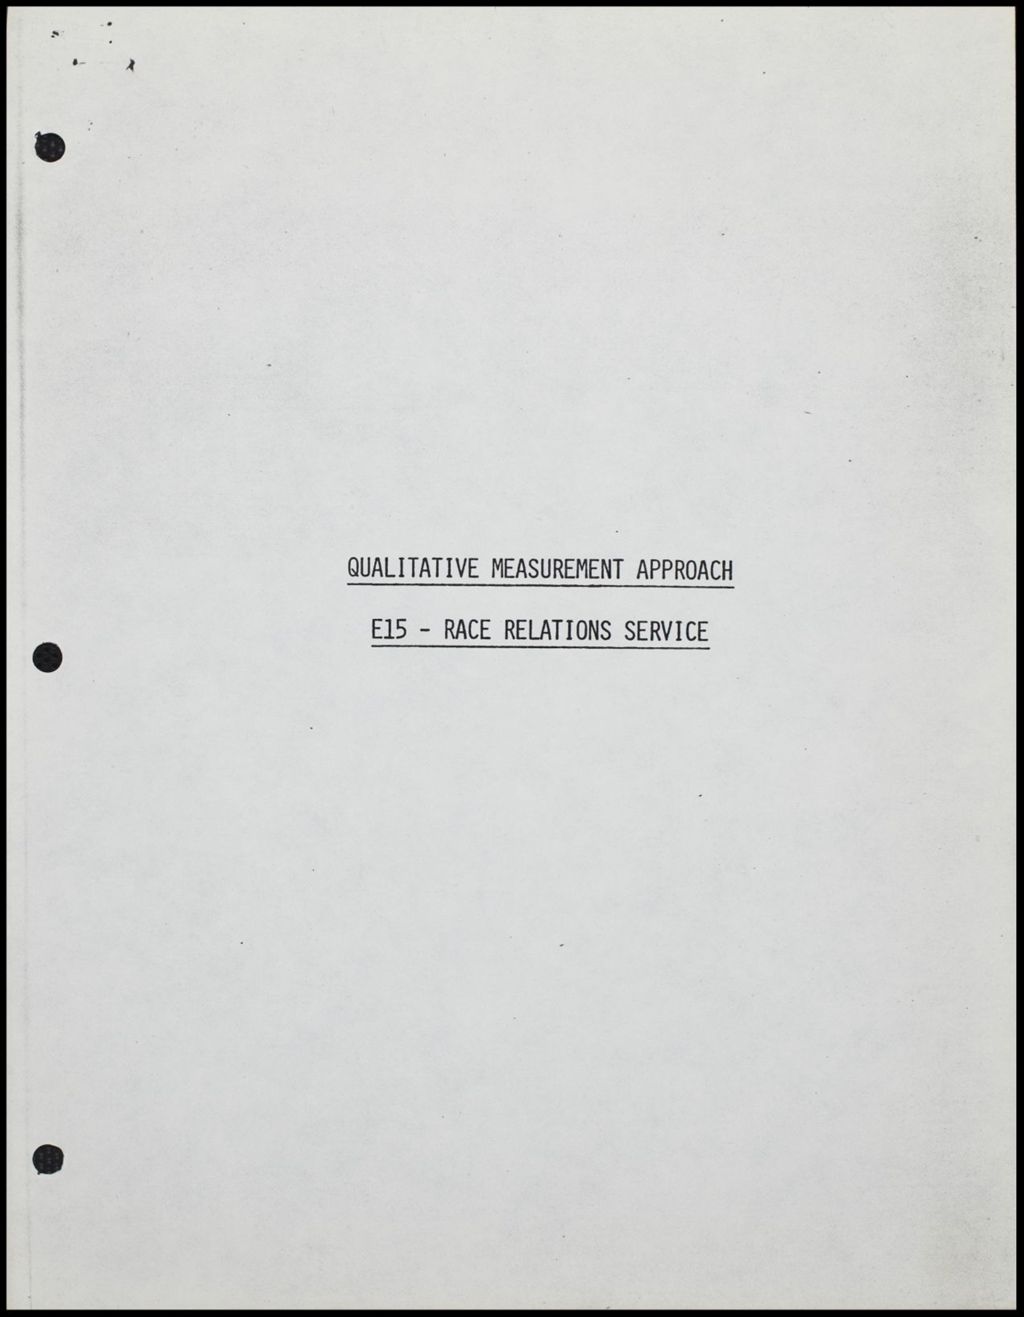 Chicago Community Fund Qualitative Measurement Approach, 1974 (Folder III-1826)